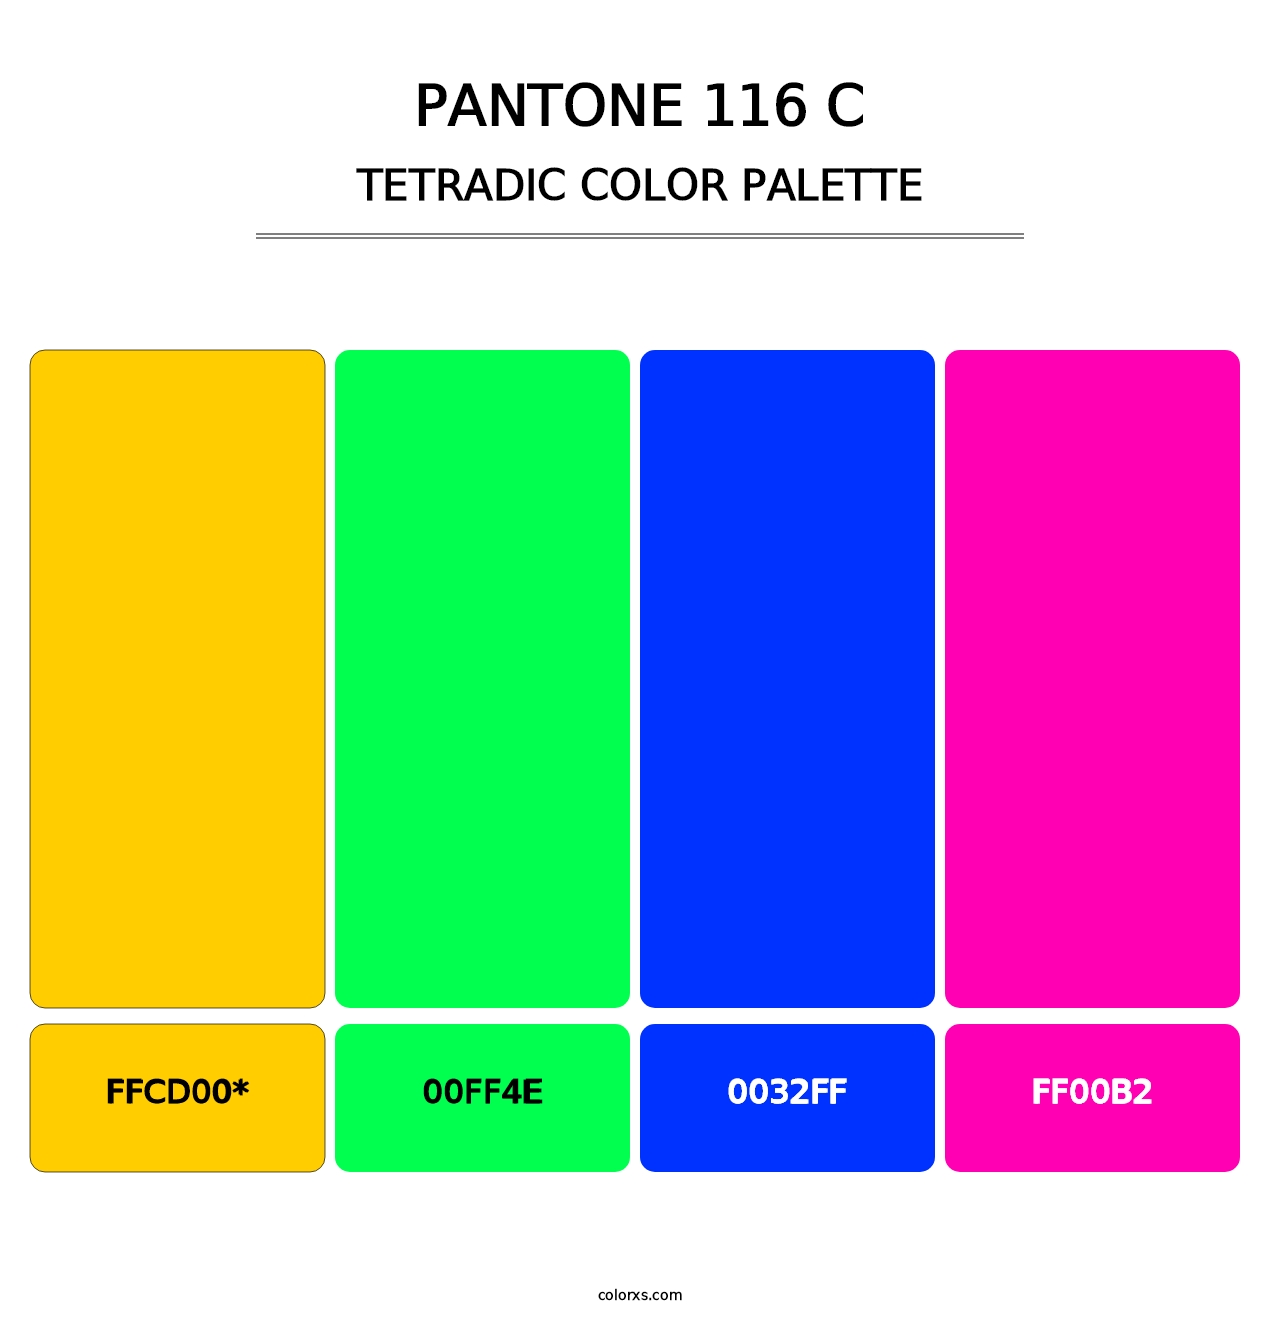 PANTONE 116 C - Tetradic Color Palette